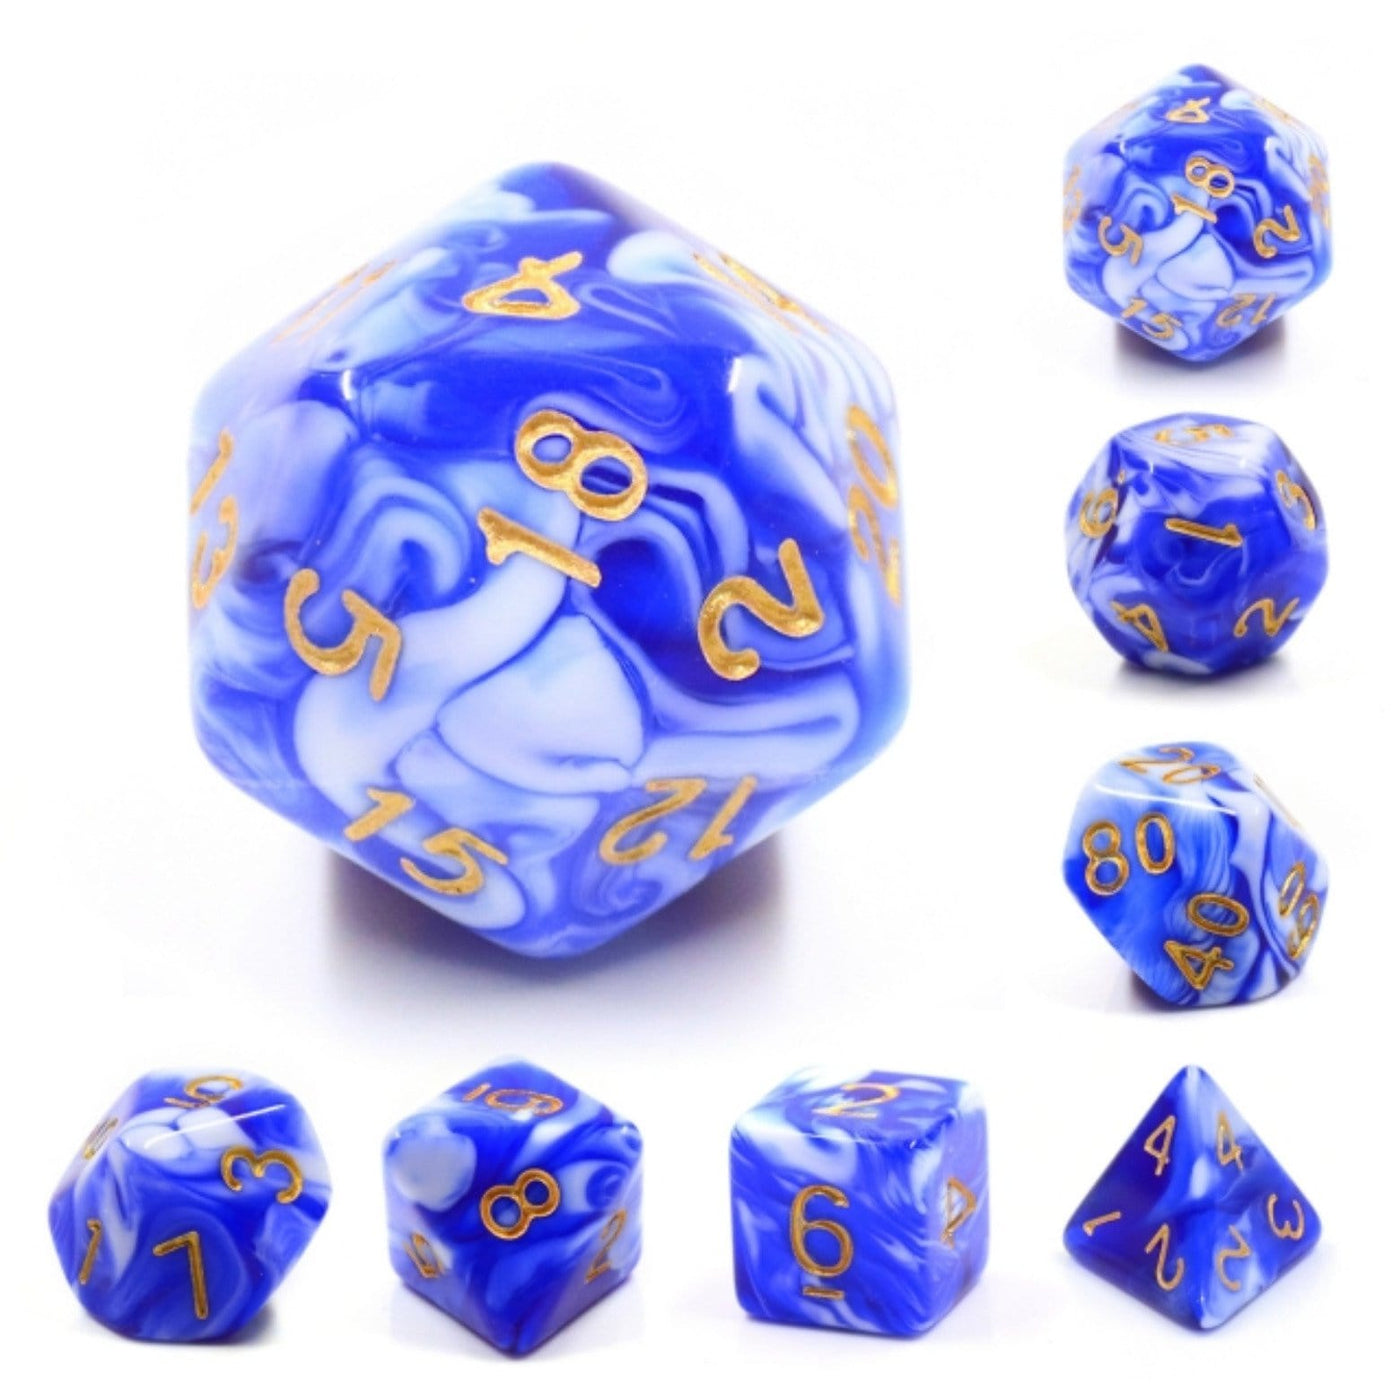 Blue Porcelain RPG Dice Set Plastic Dice Foam Brain Games